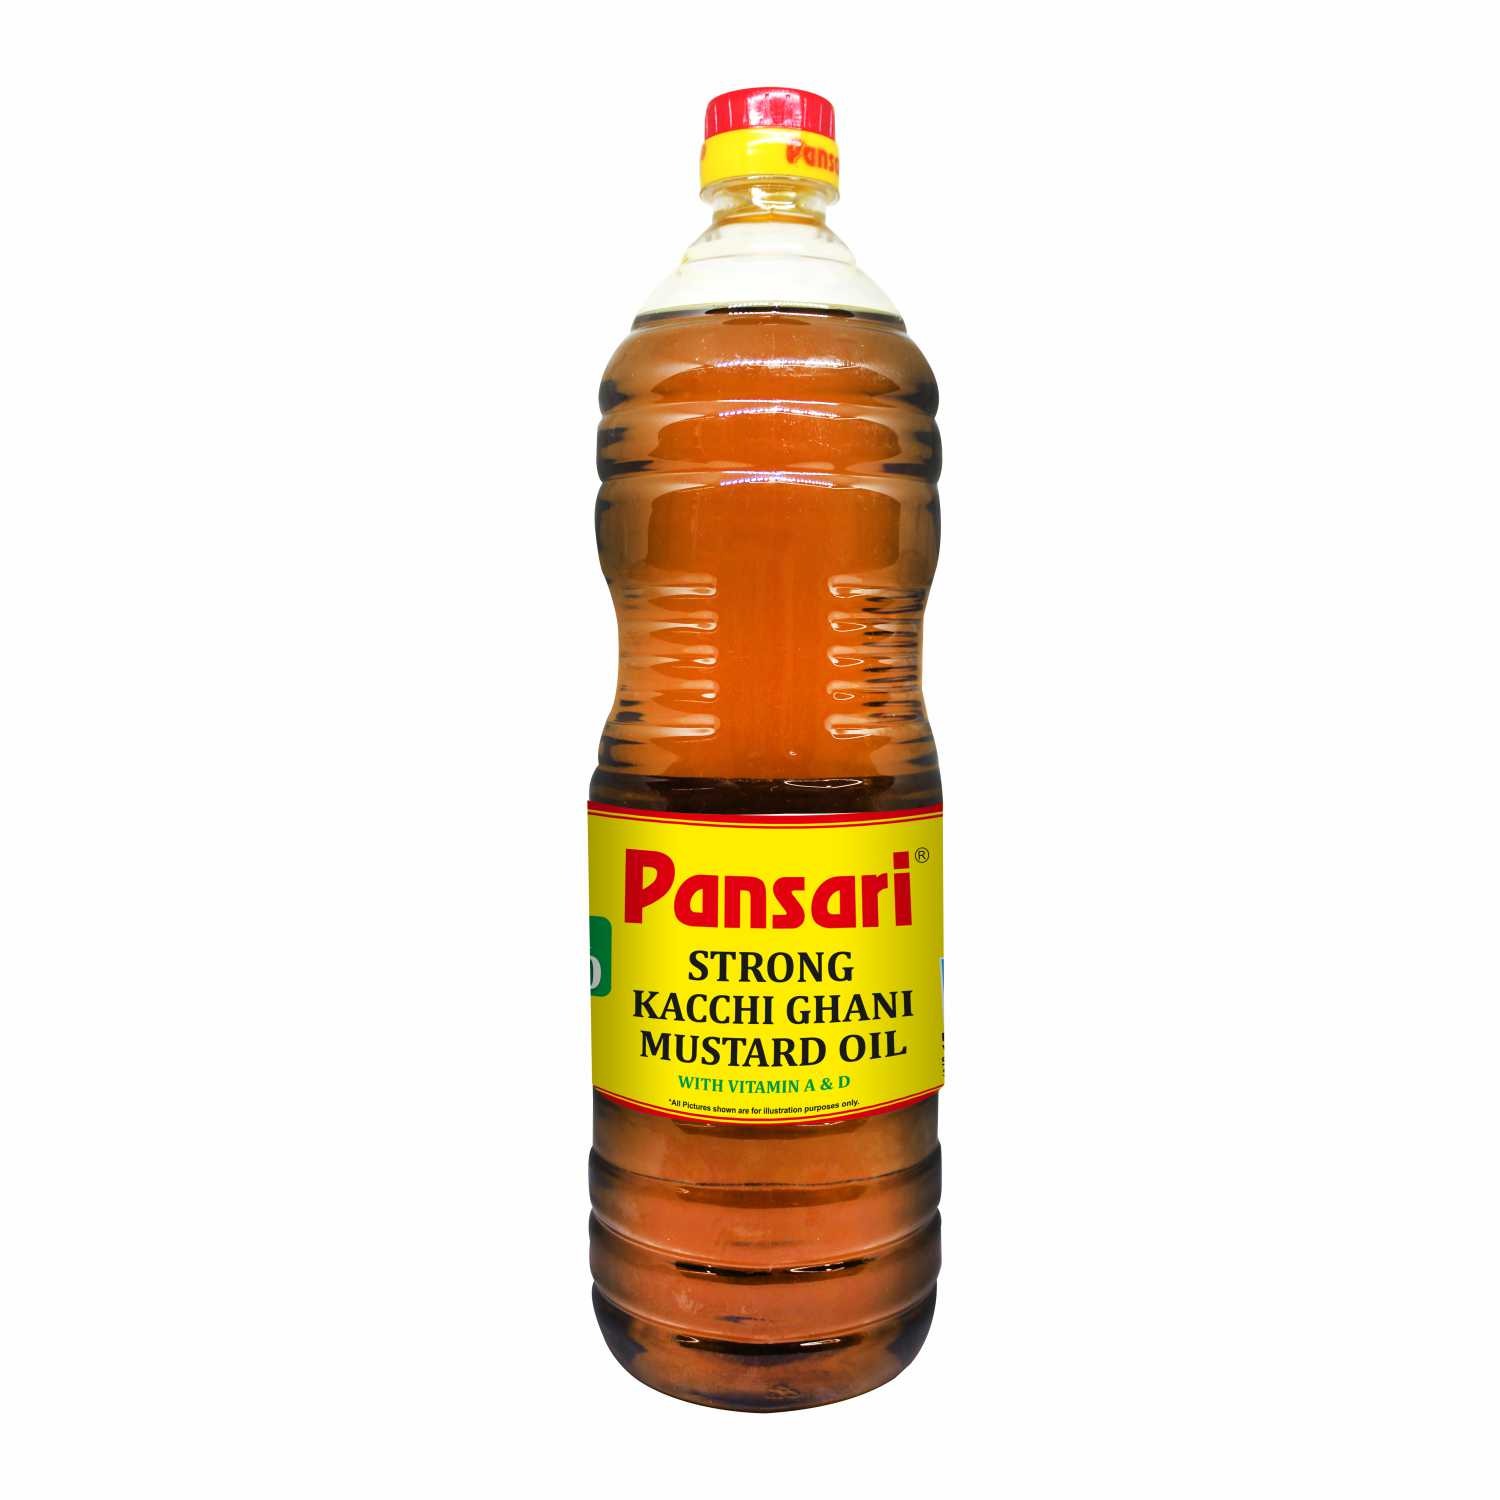 Pansari - Strong Kacchi Ghani Mustard Oil, 1 L Bottle